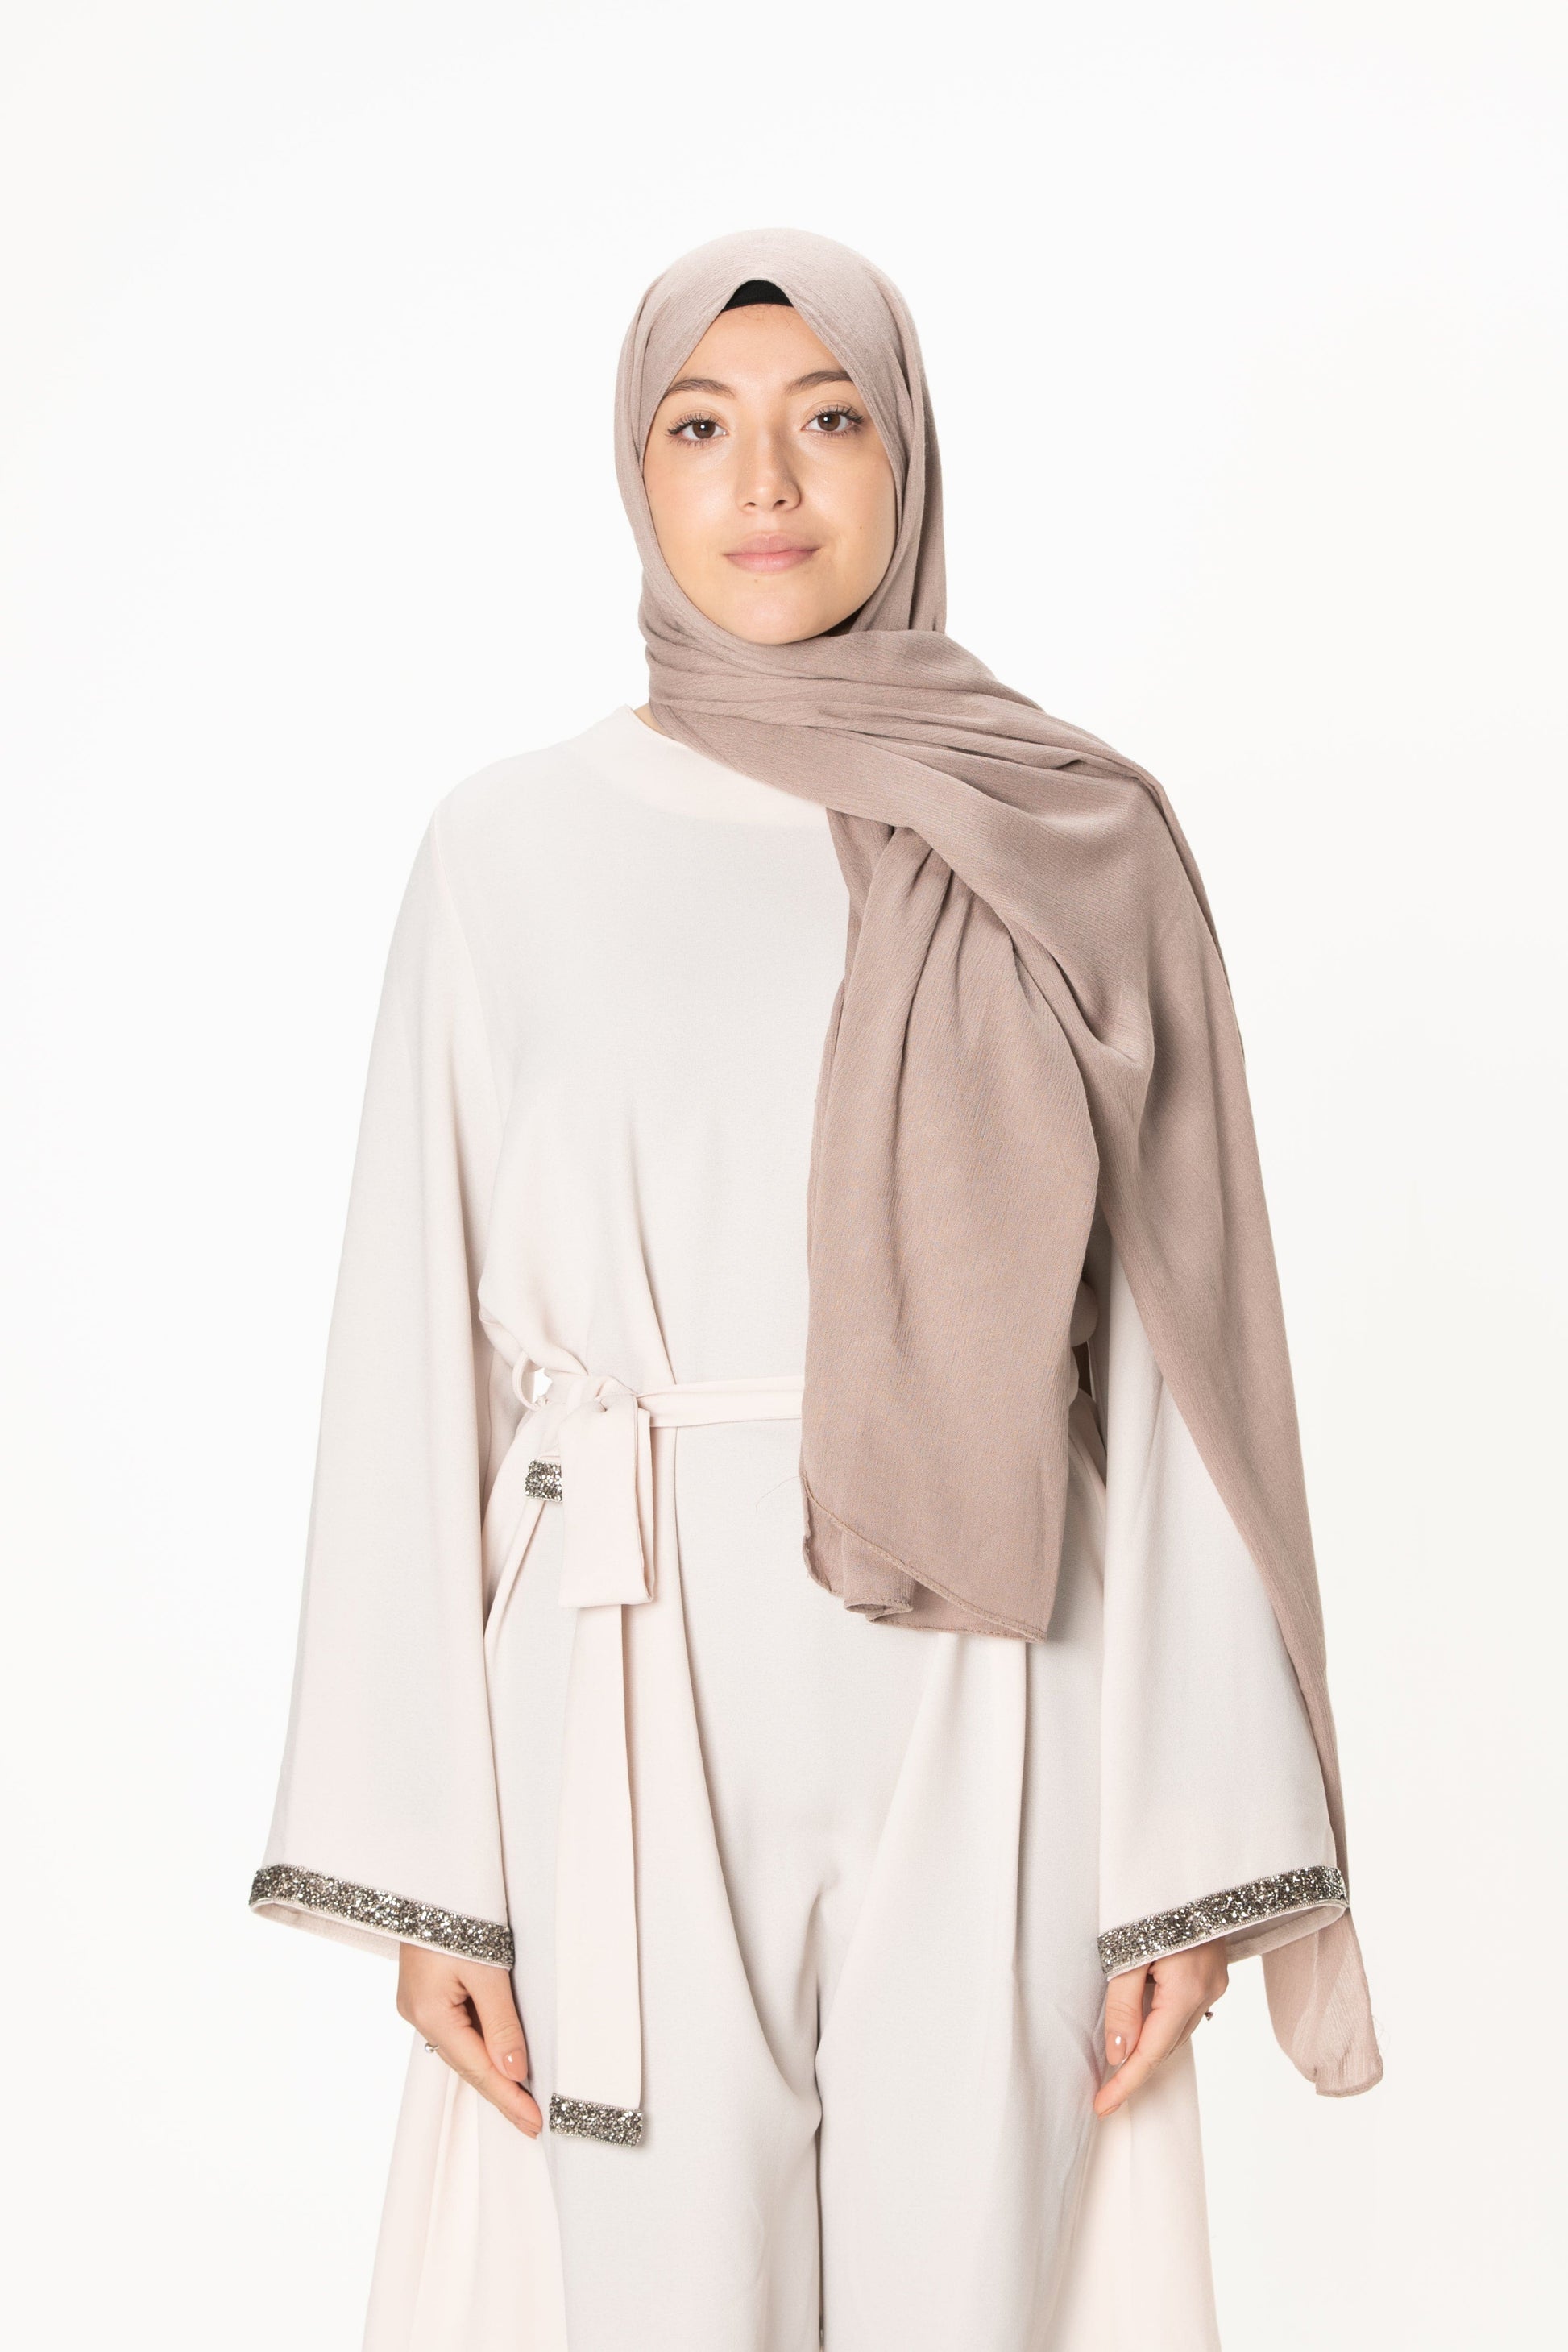 jolienisa Tan Modal Crinkle Hijab